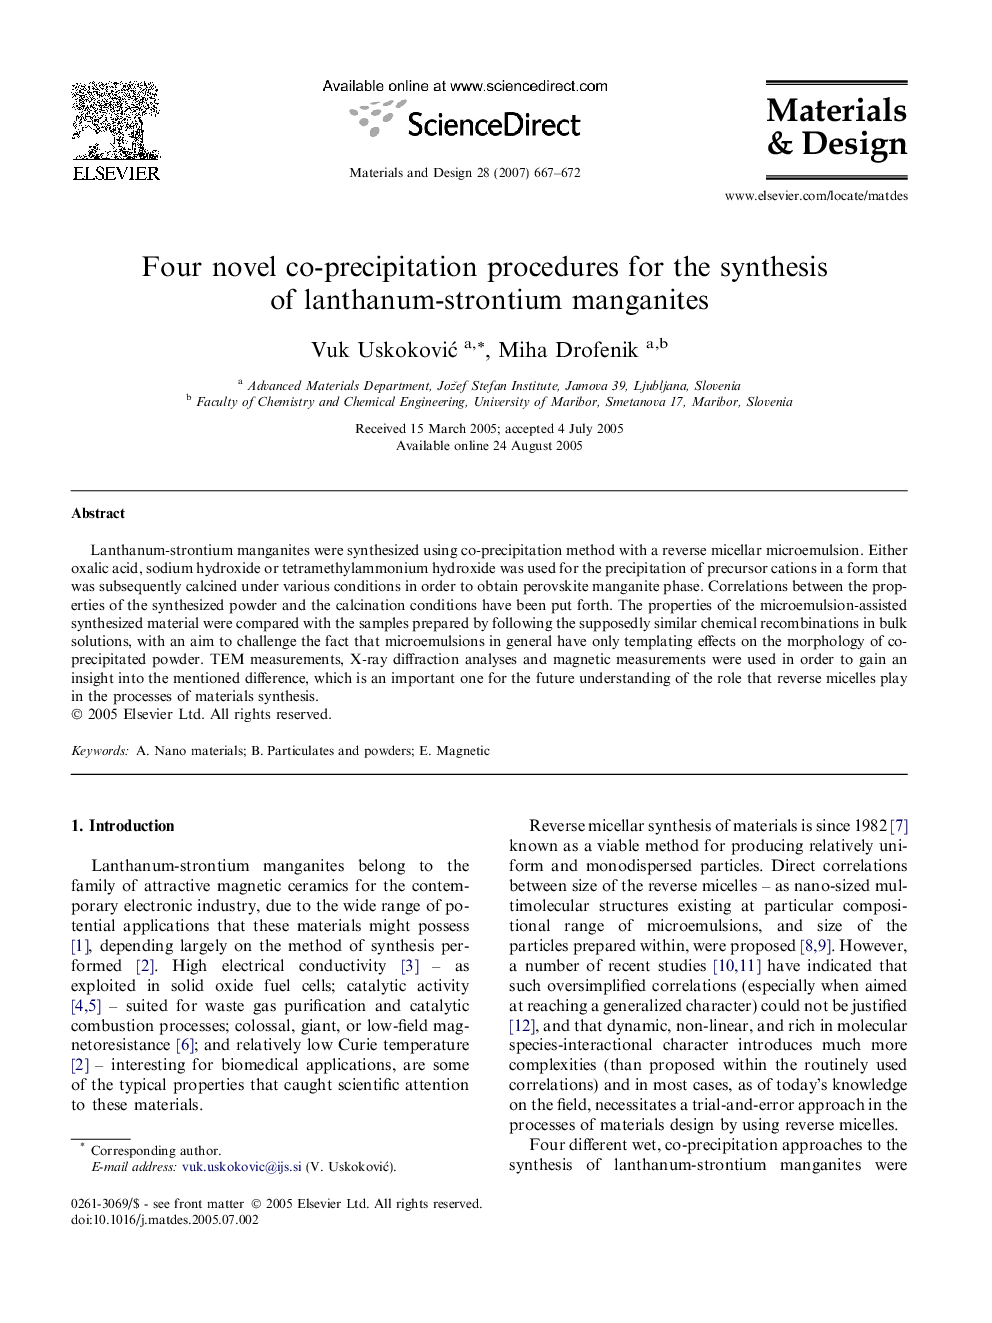 Four novel co-precipitation procedures for the synthesis of lanthanum-strontium manganites